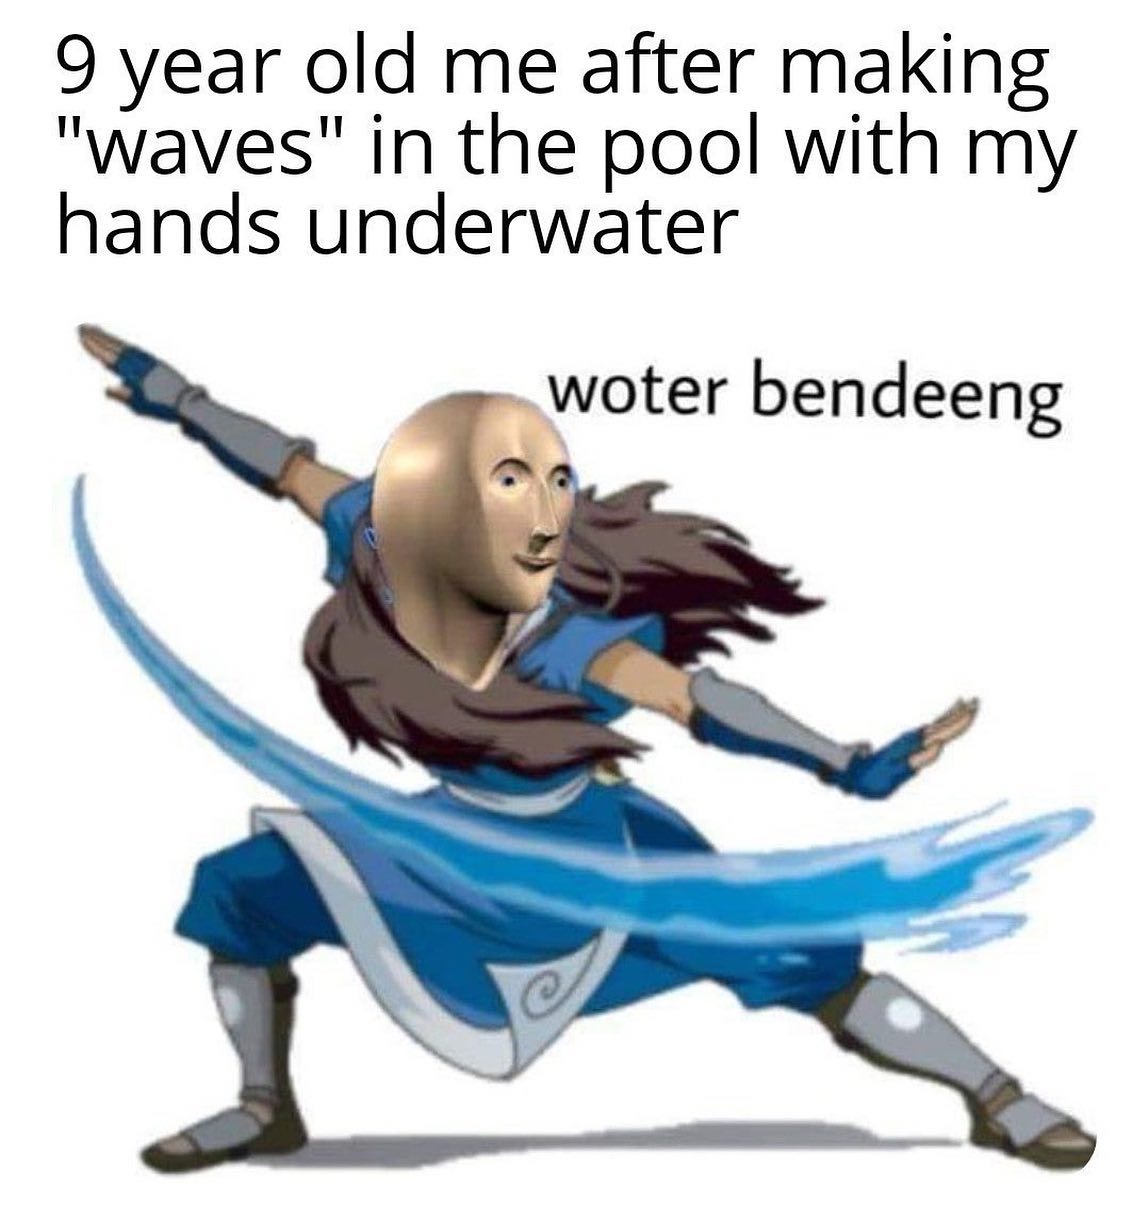 dank memes - water bender meme - 9 year old me after making